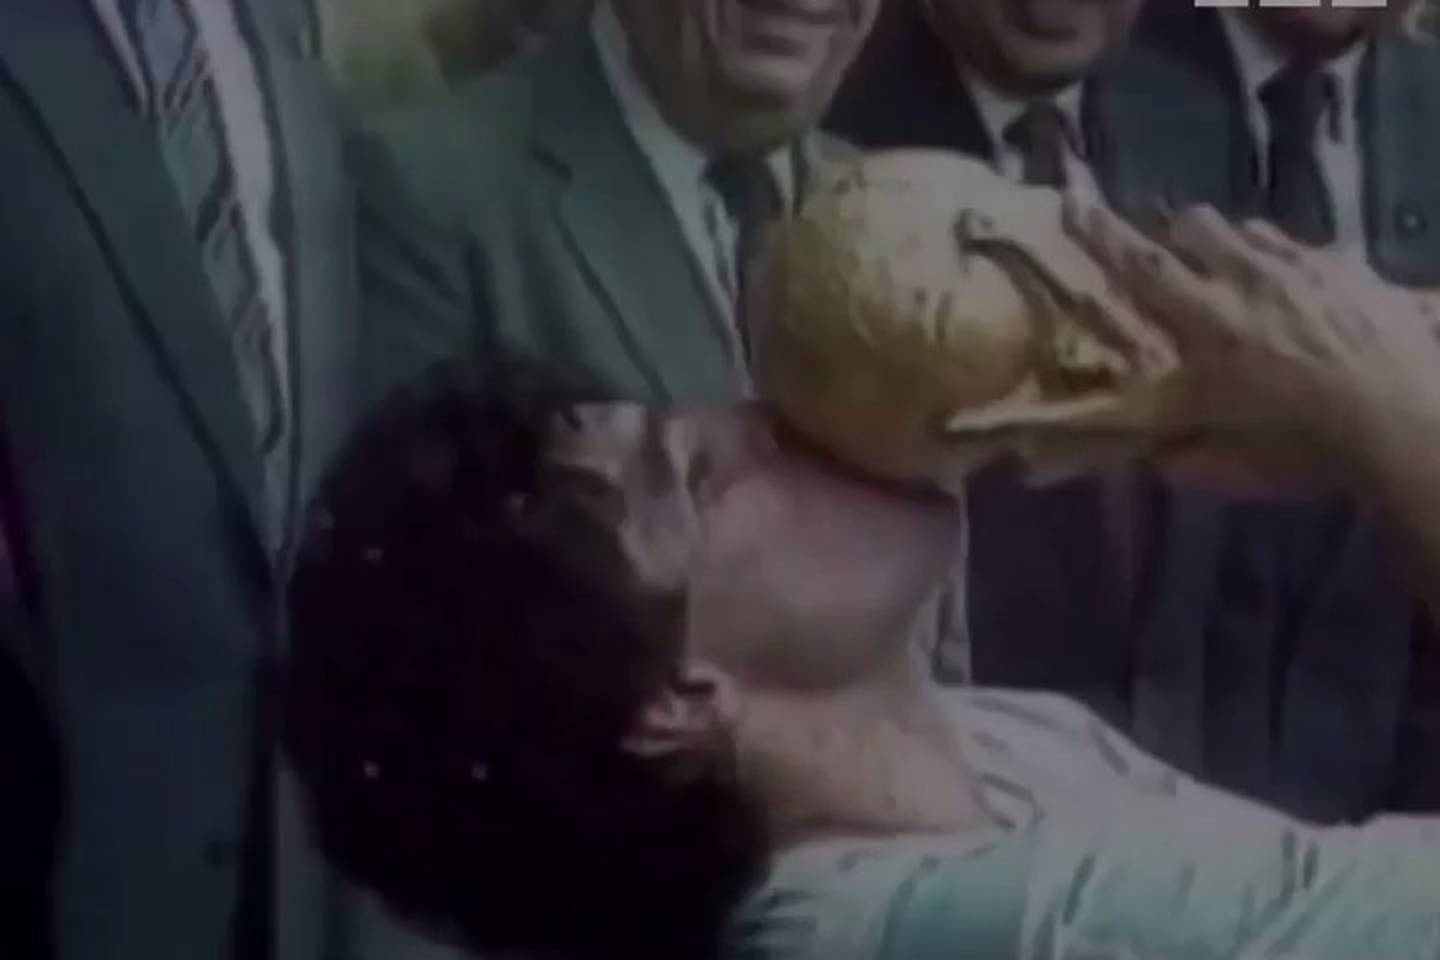 I have Maradona engrained in my head' - Zidane in emotional